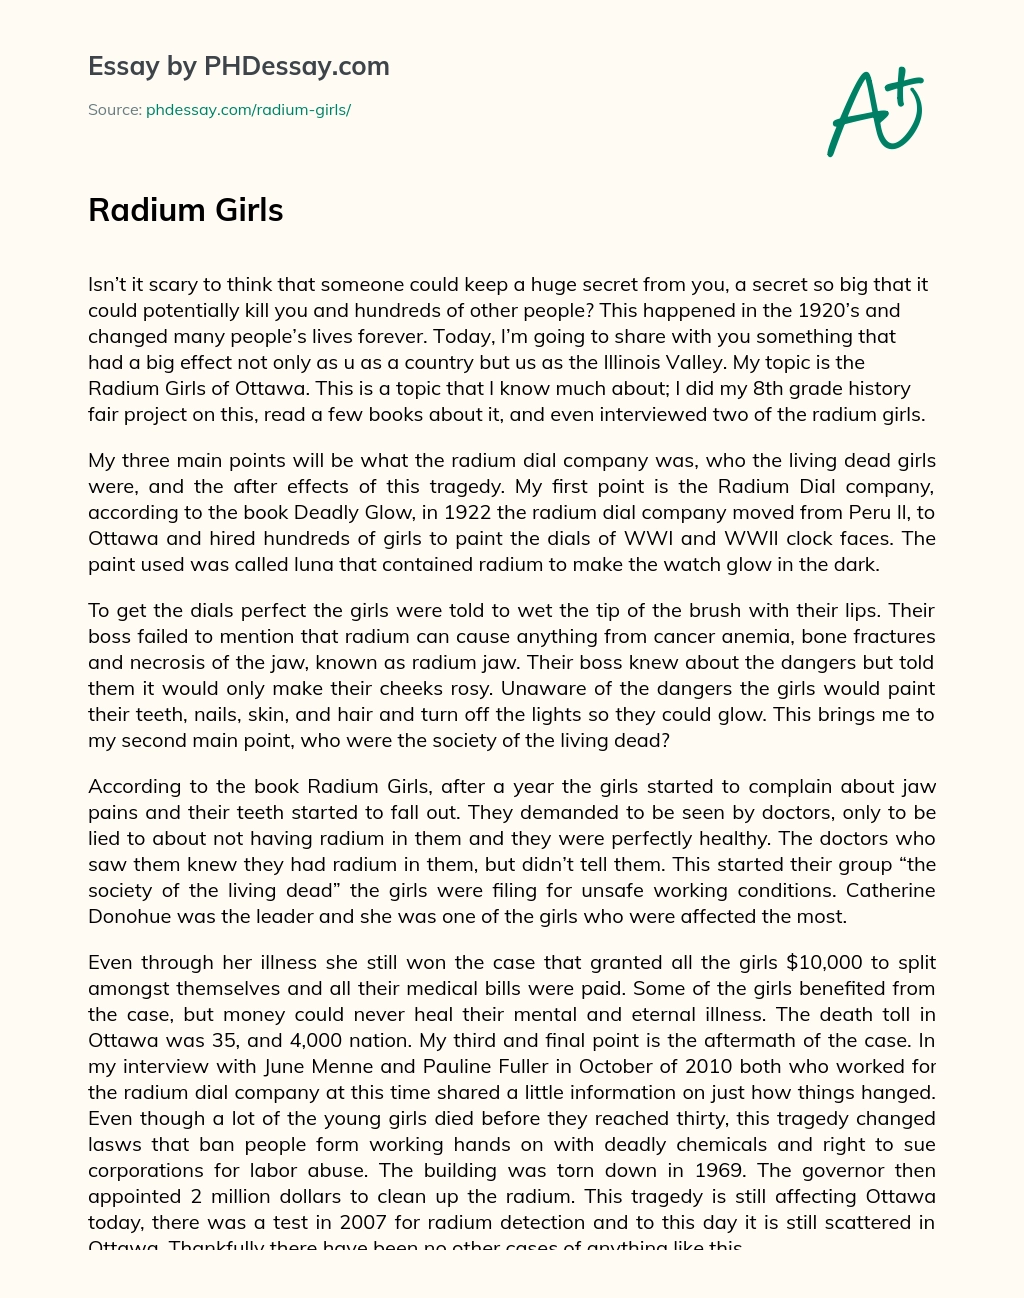 Radium Girls essay